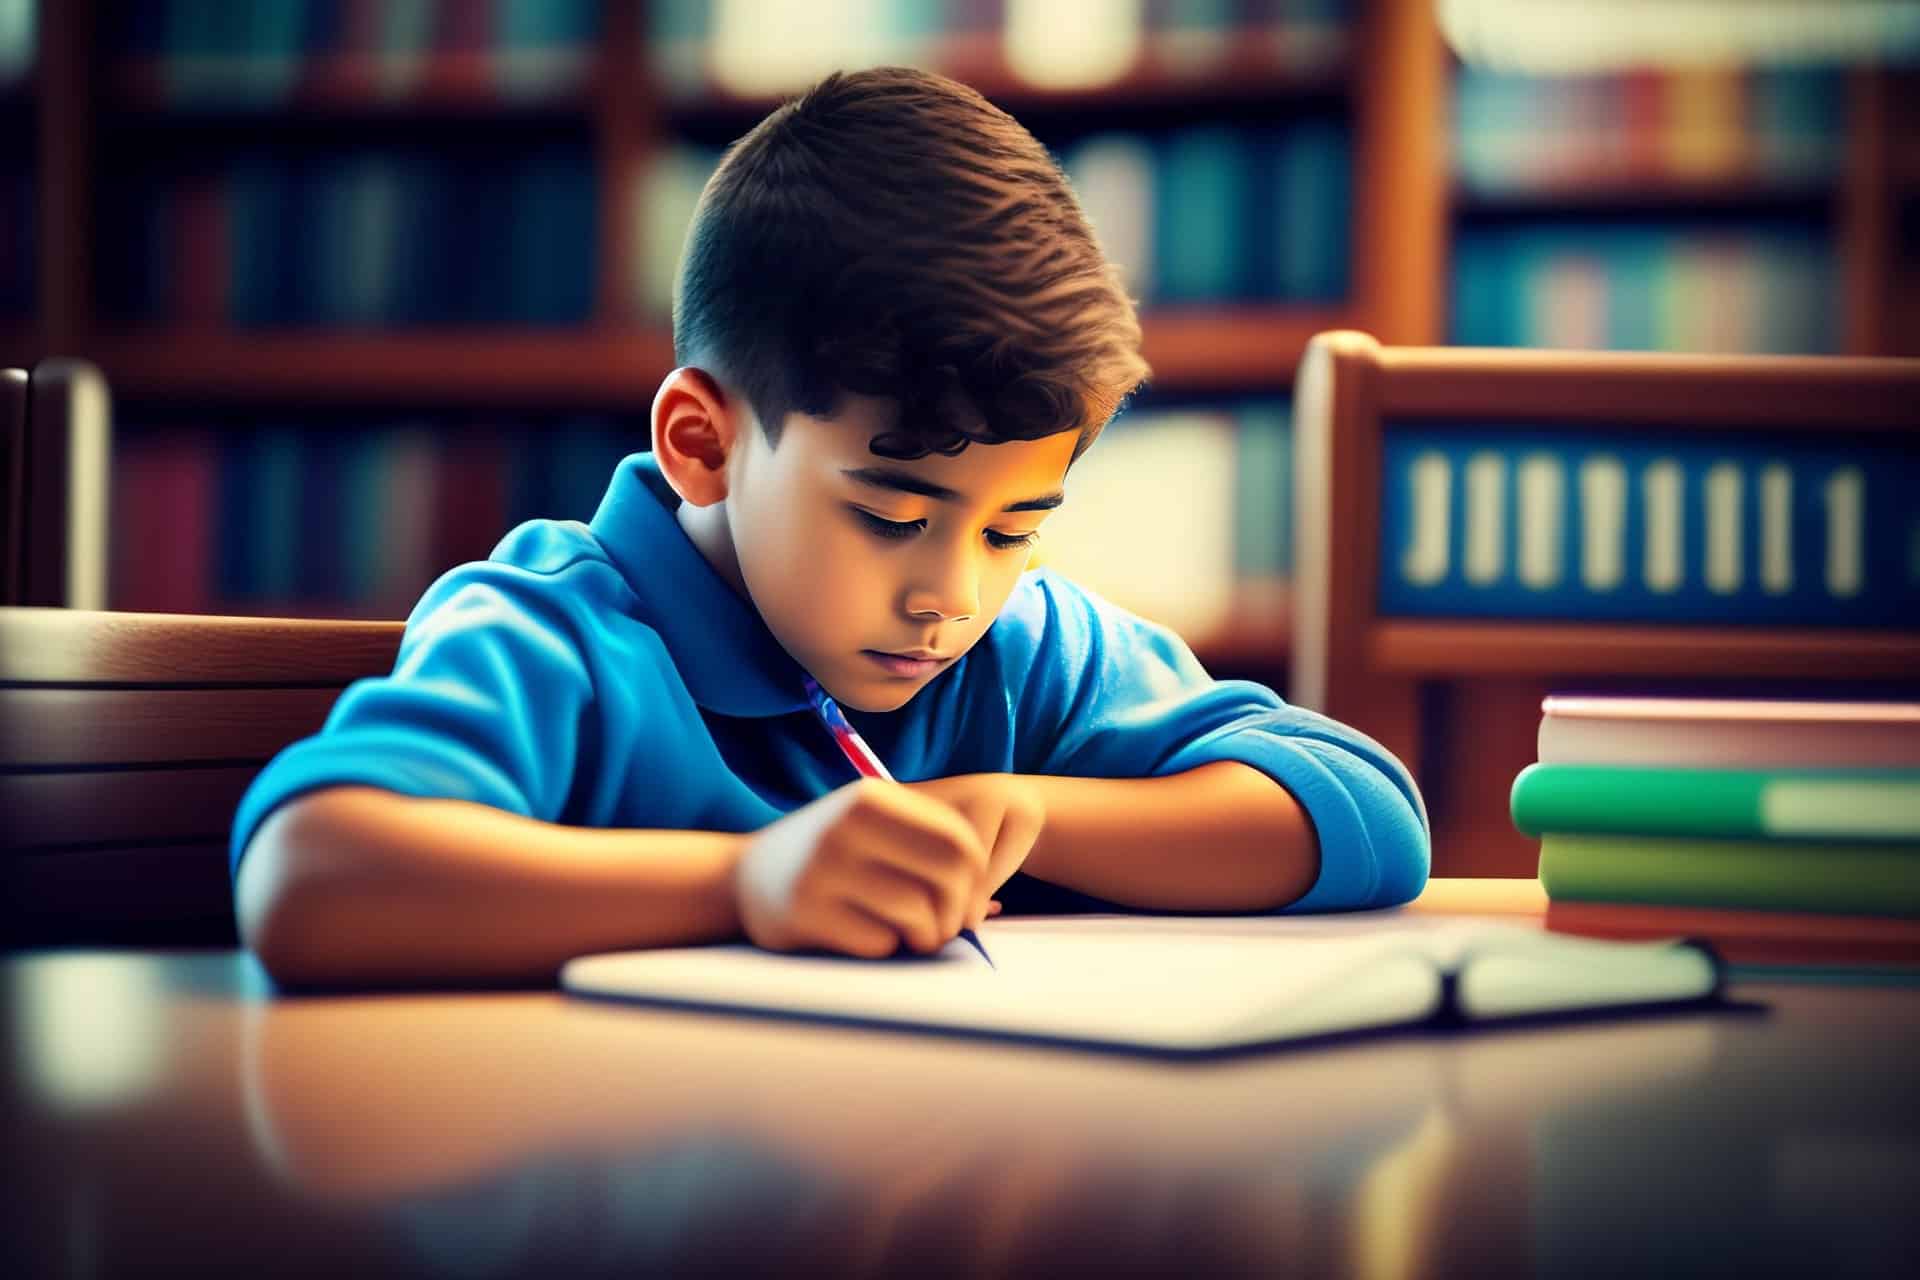 Illustration of child studying by Muhammad Usama from Pixabay